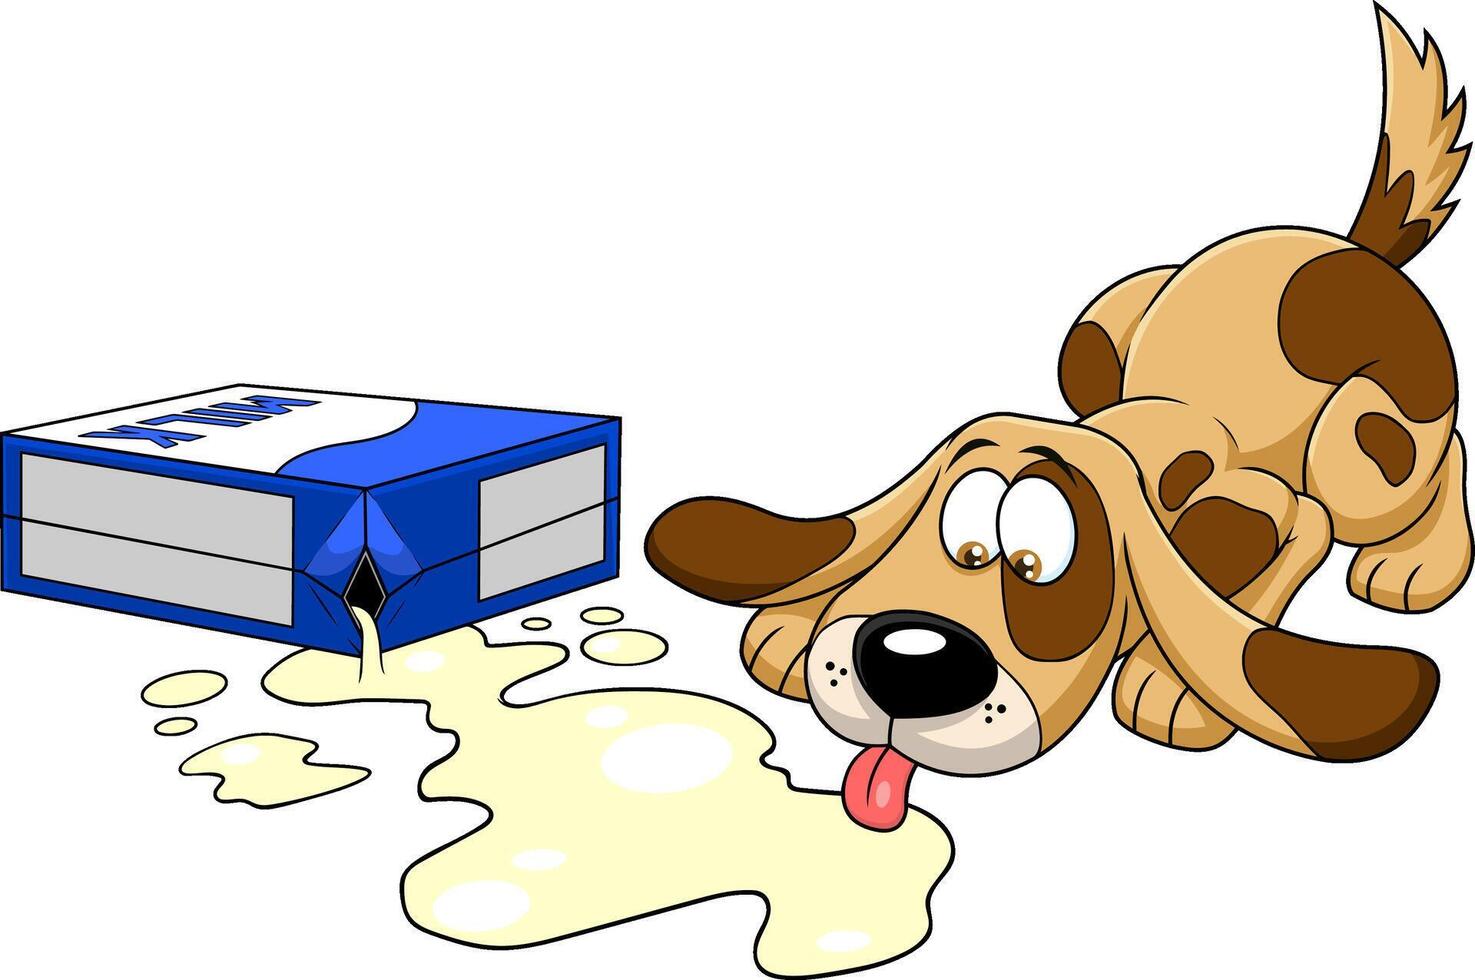 Sympathetic Dog Cartoon Character Drinking Milk From Broken Box vector